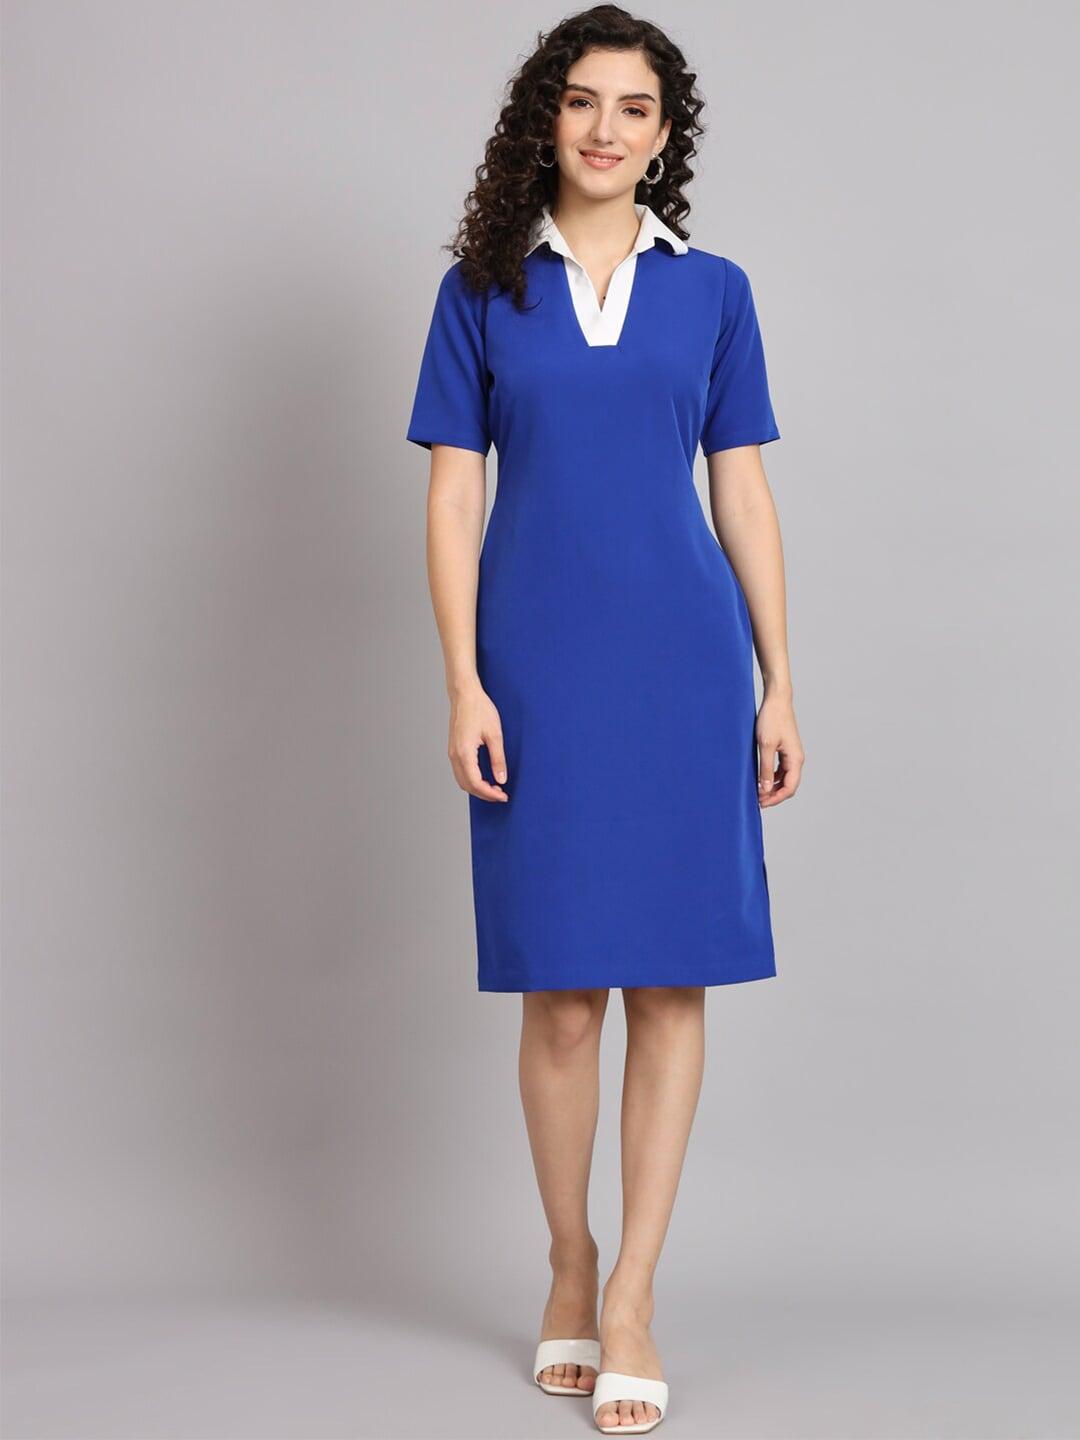 powersutra blue sheath dress